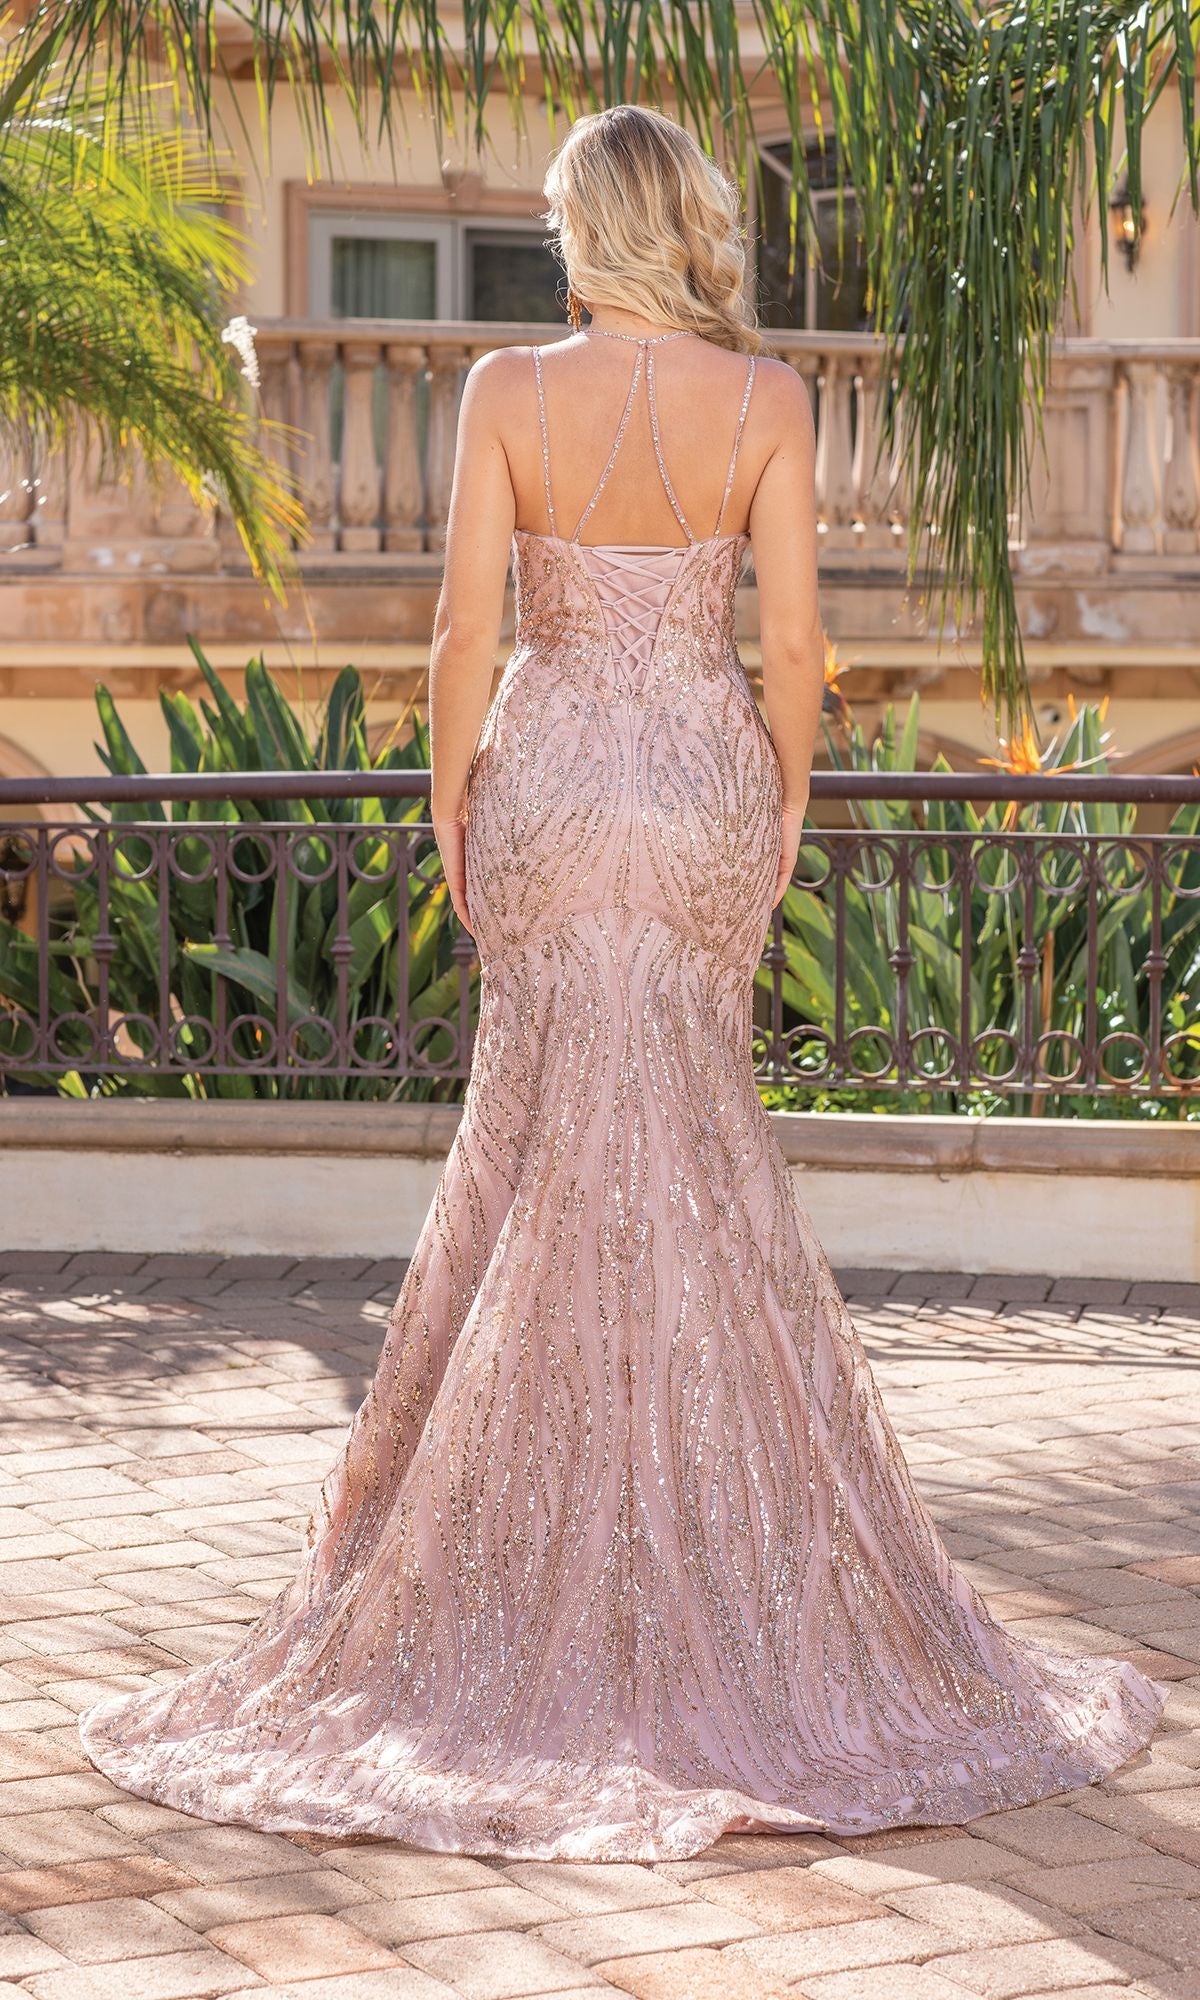 Long Glitter Mermaid Formal Prom Dress 4337